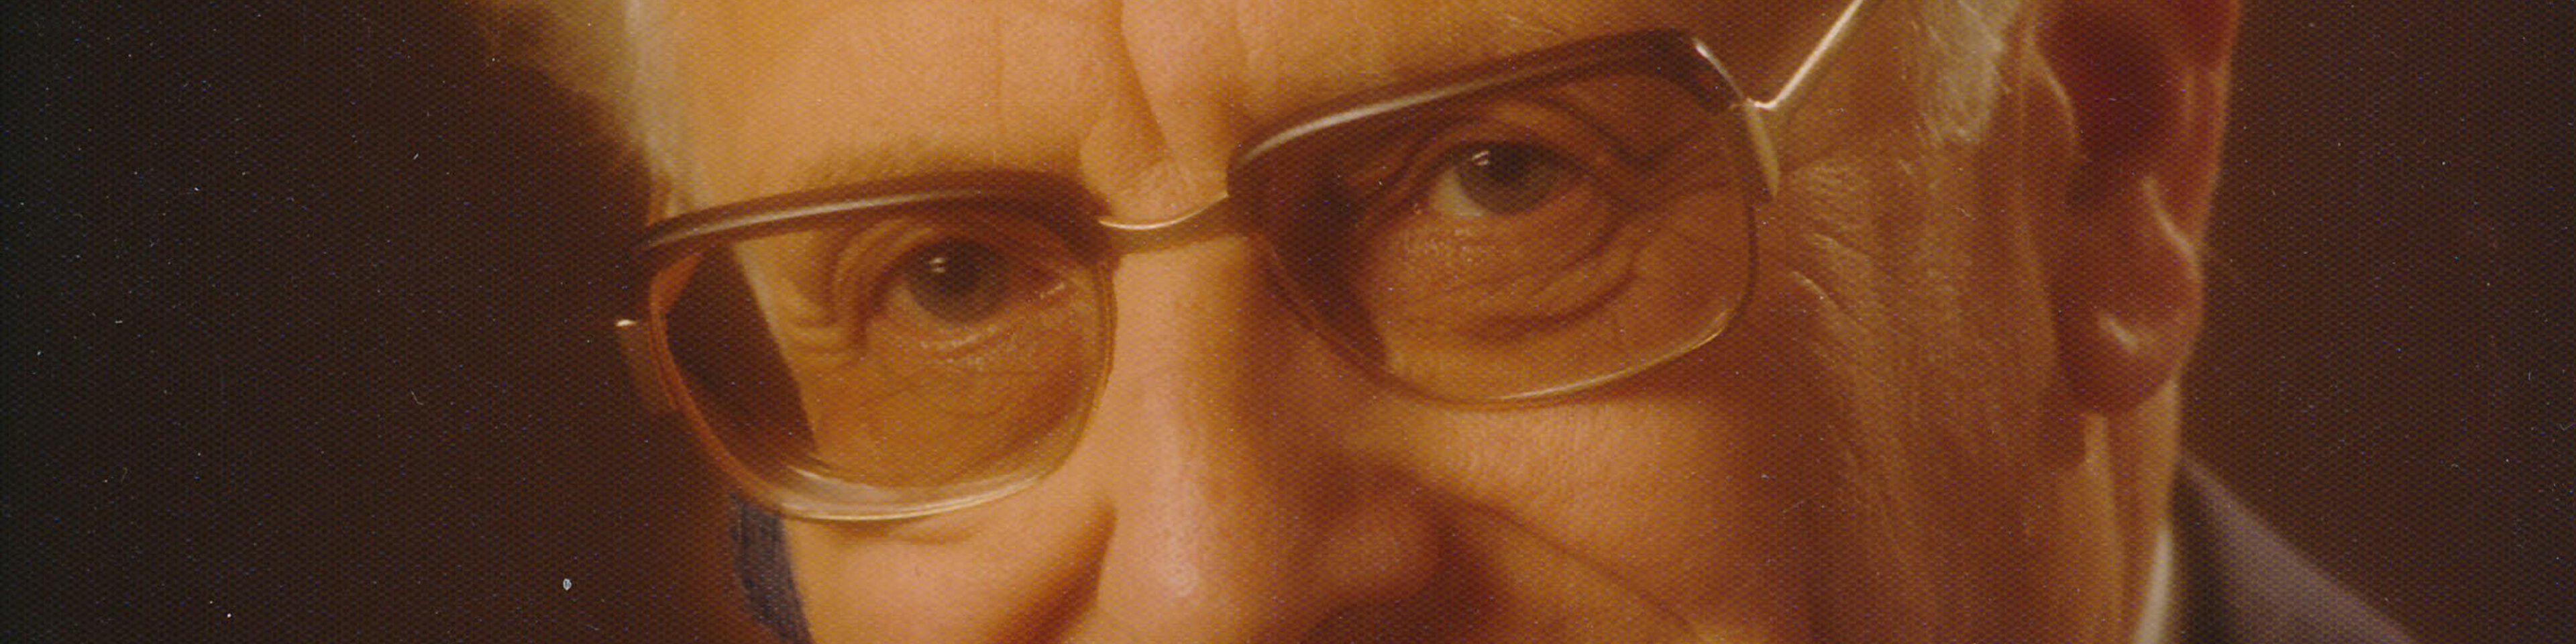 Prälat Franz Sales Müller, Caritasdirektor 1962-1975, 1. Vorsitzender des Diözesan-Caritasverbands 1975-86, Portraitfoto ca. 1989. | © (Fotograf unbekannt, Archiv des DiCV München und Freising e.V., Fotosammlung)